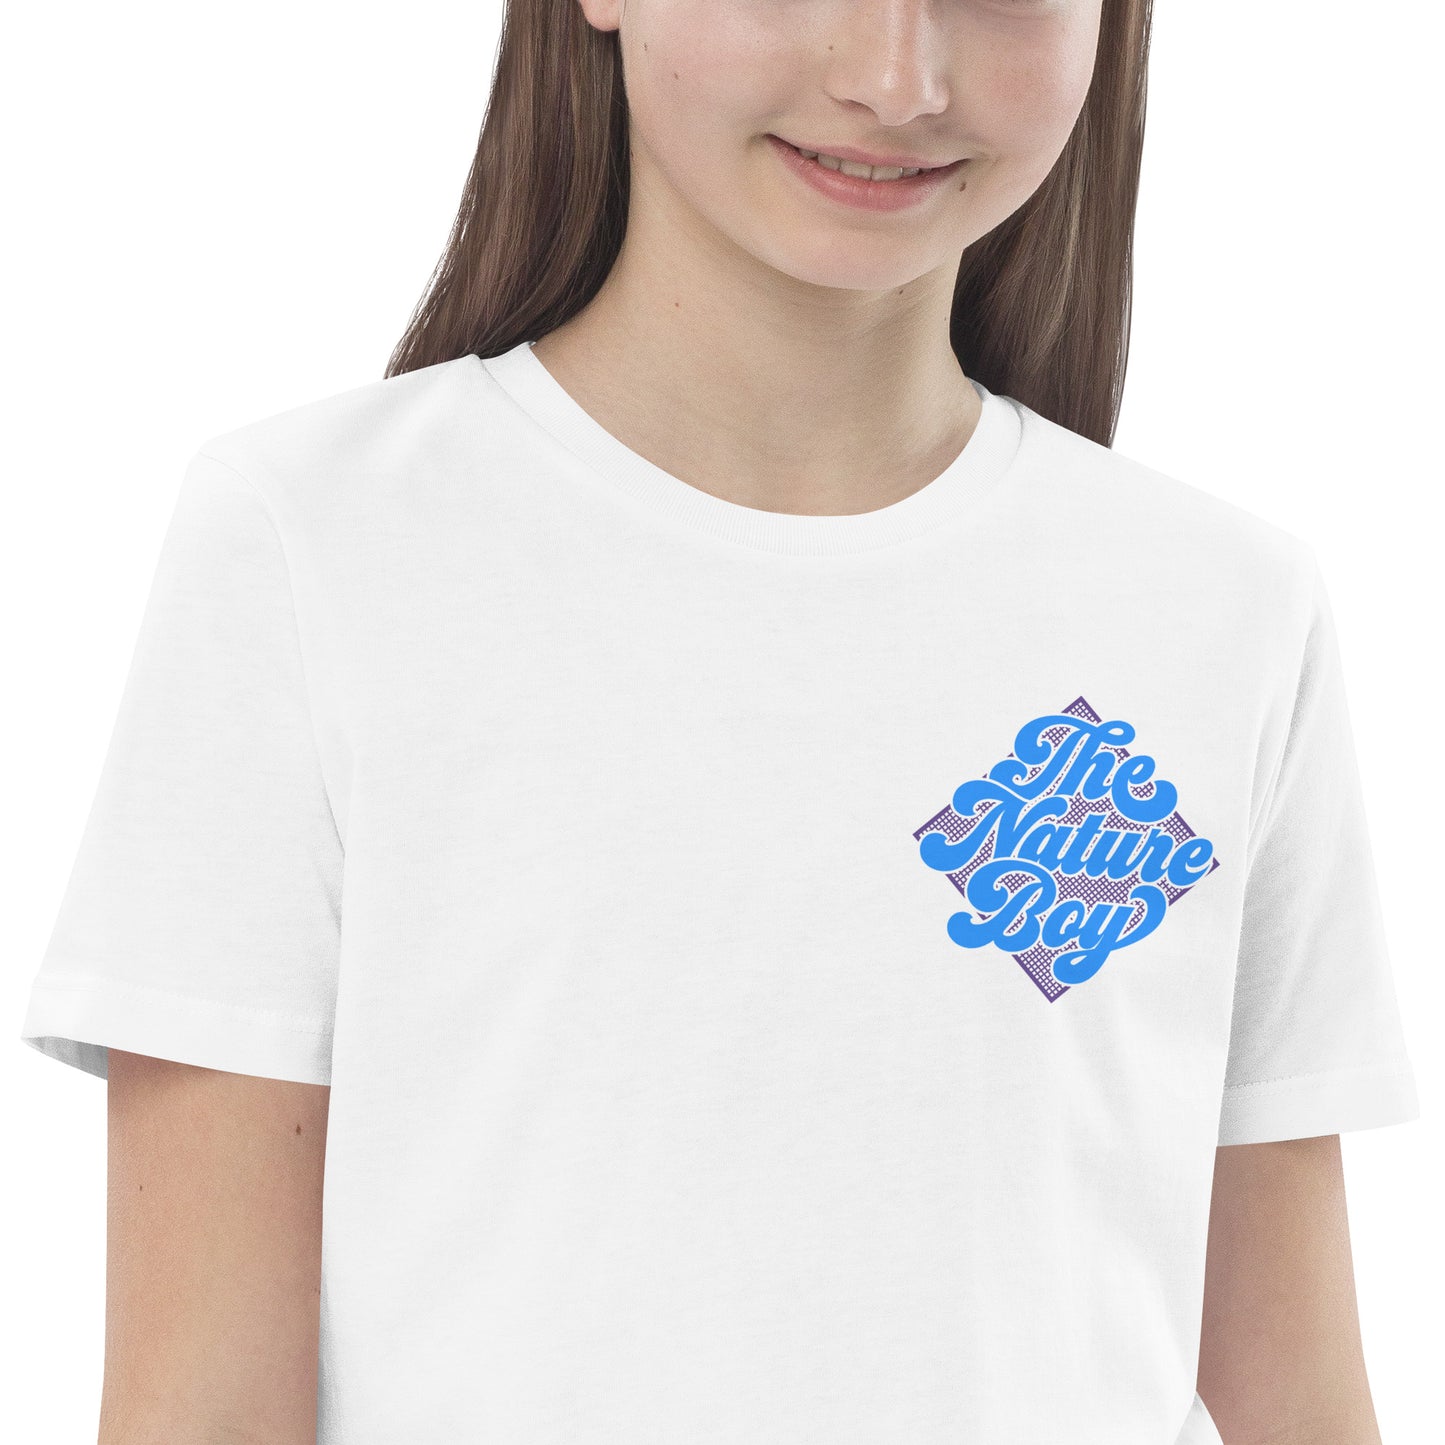 Ric Flair Nature Boy Embroidered Organic cotton kids t-shirt